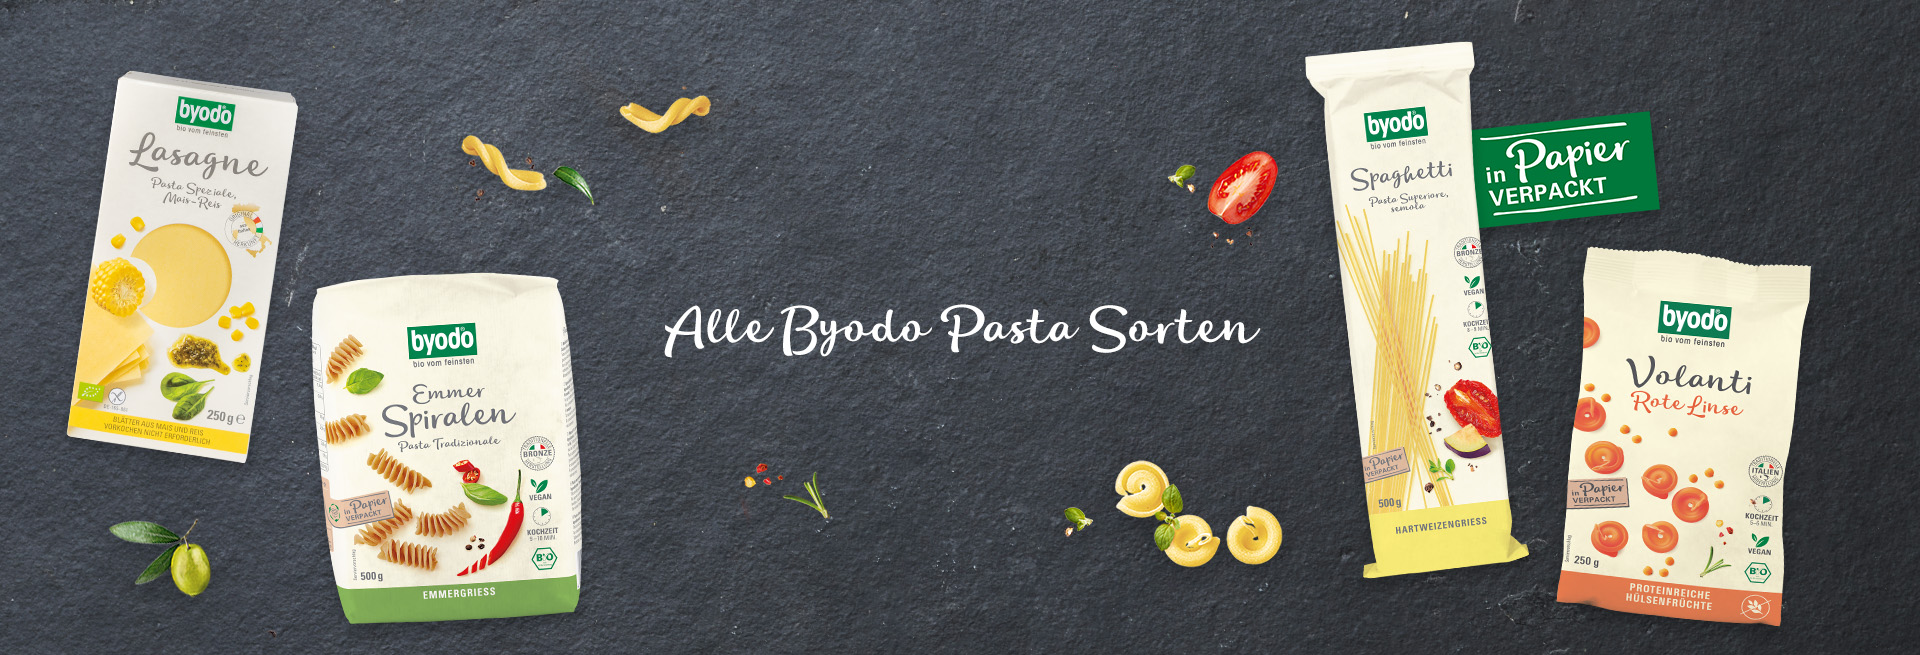 Byodo Bio-Pasta Spaghetti, Spiralen, Strozzapreti